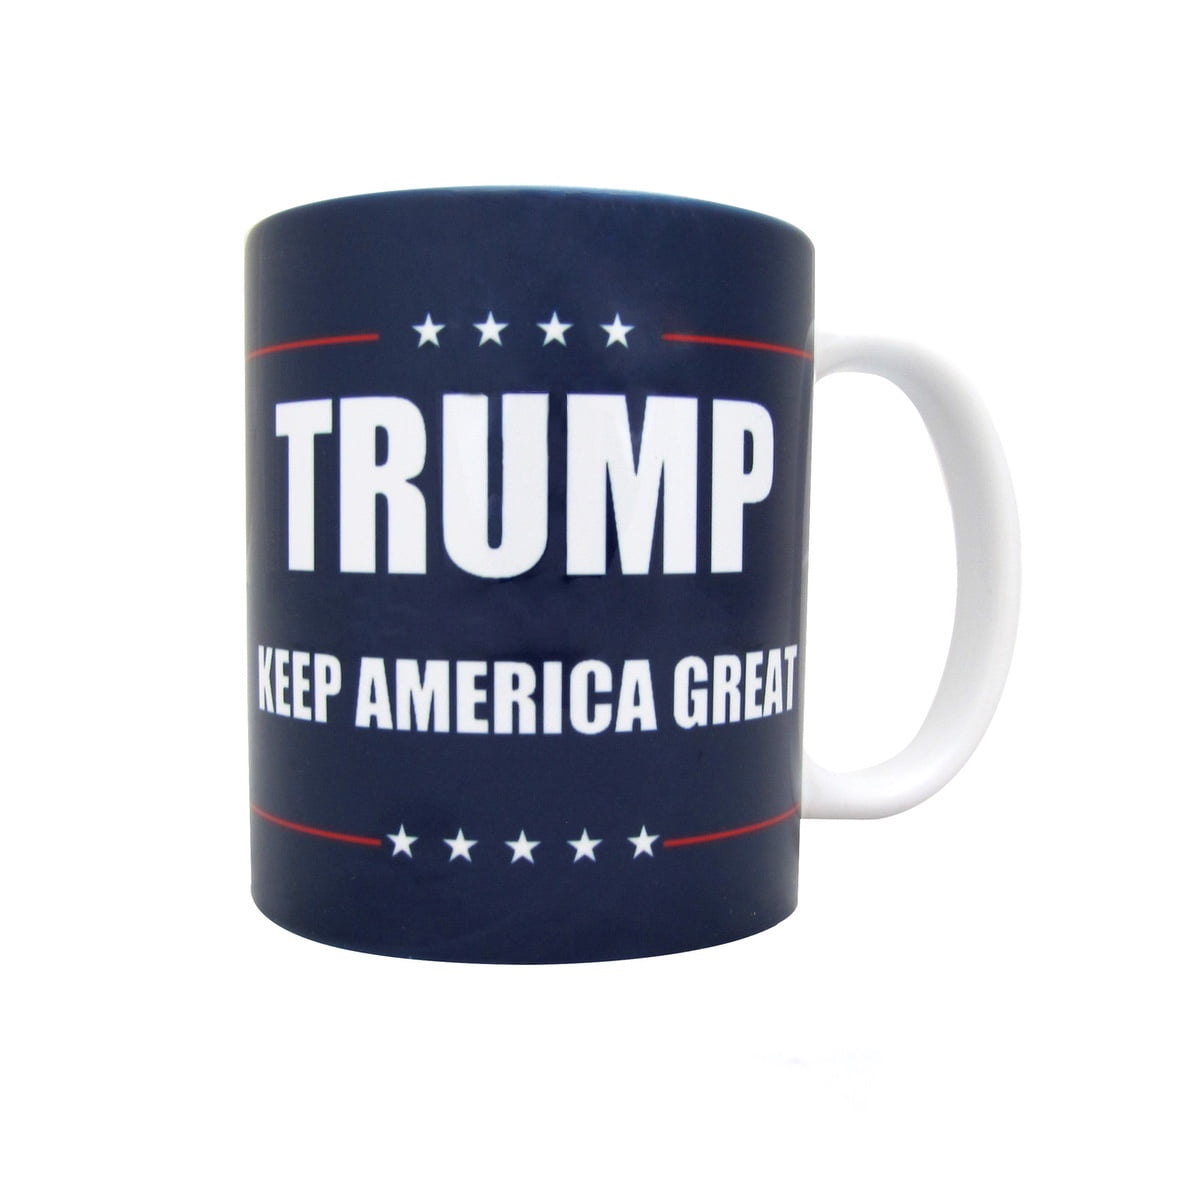 PRESIDENT DONALD TRUMP KEEP AMERICA GREAT Red Coffee Mug Cup 